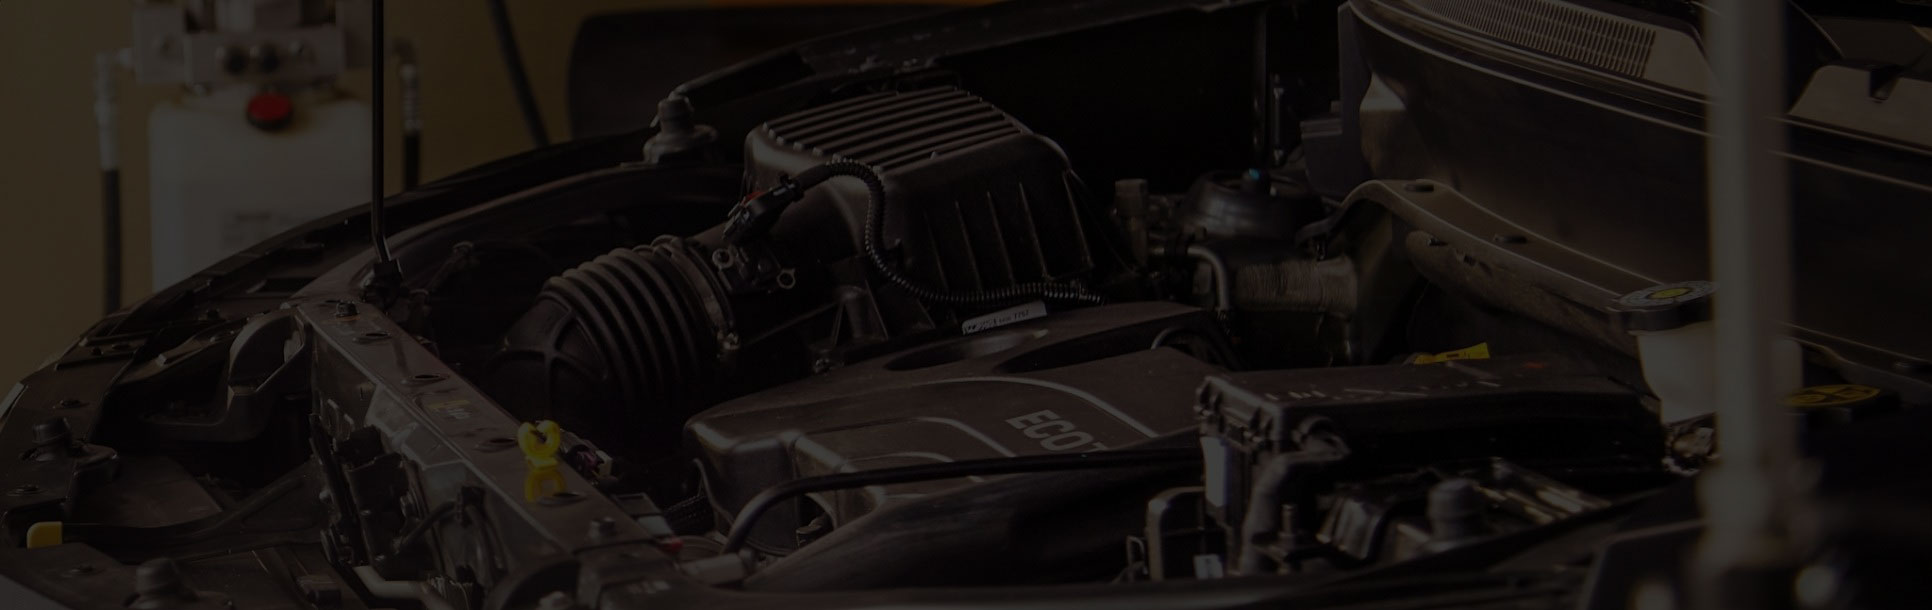 Engine Repair Service - Car Engine Maintenance & Diagnostics - Engine Tune Up